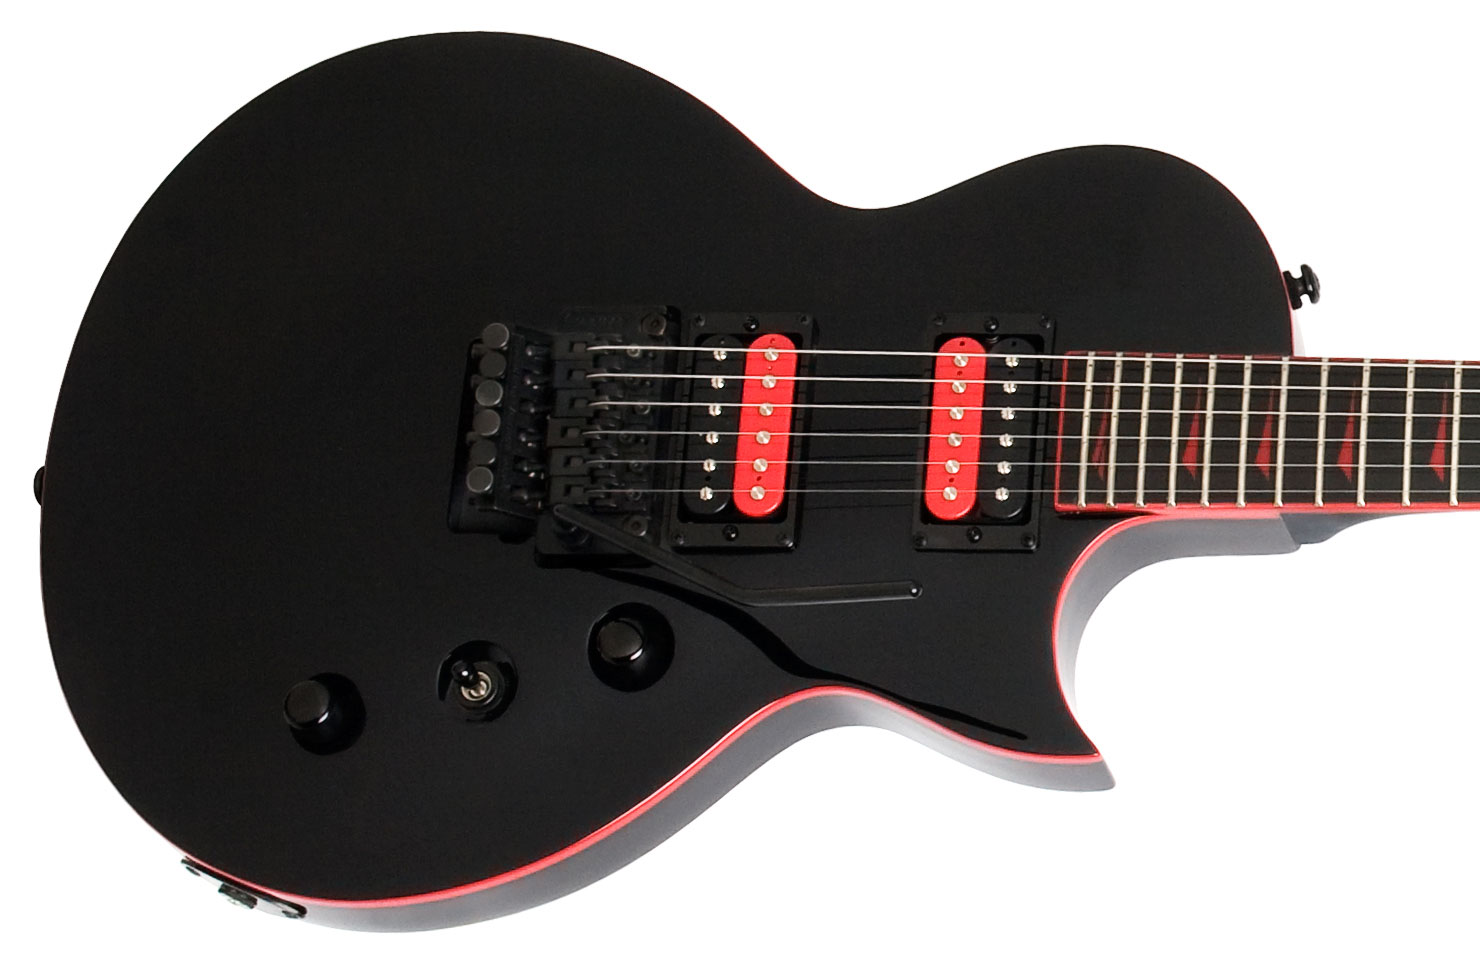 Kramer Assault 220 2h Fr Rw - Black Red Binding - Single cut electric guitar - Variation 1